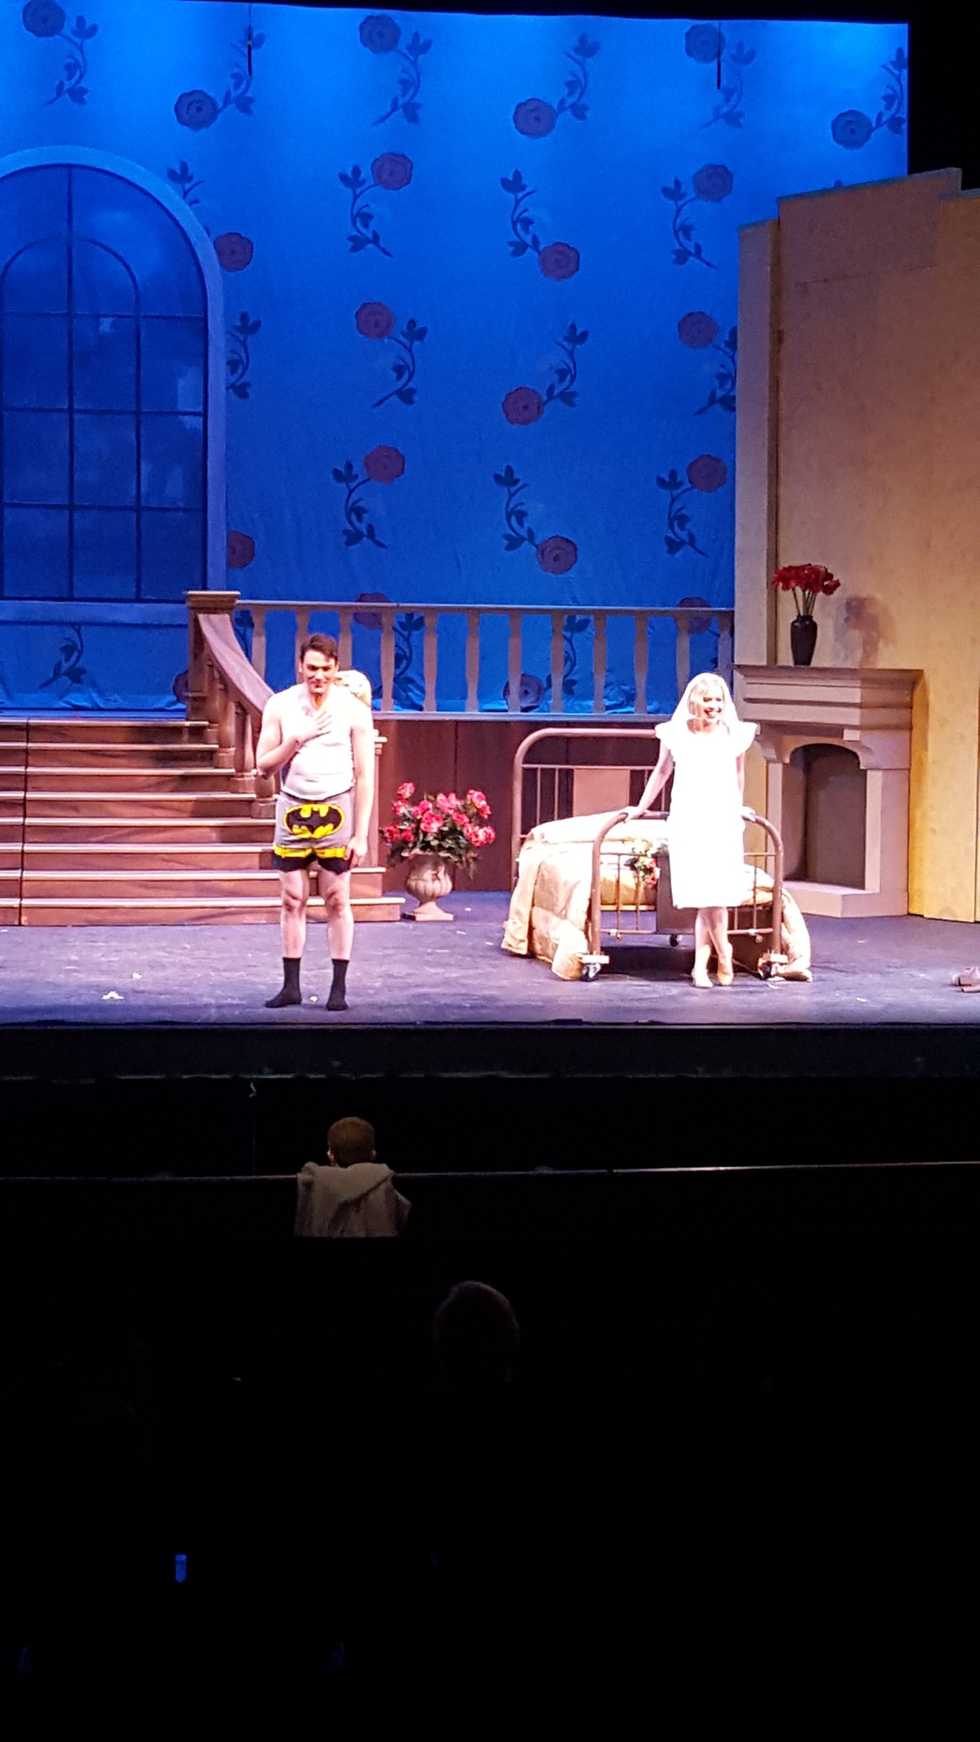 A scene from the Wichita Grand Opera production of Grand Duchess Of Gerolstein.